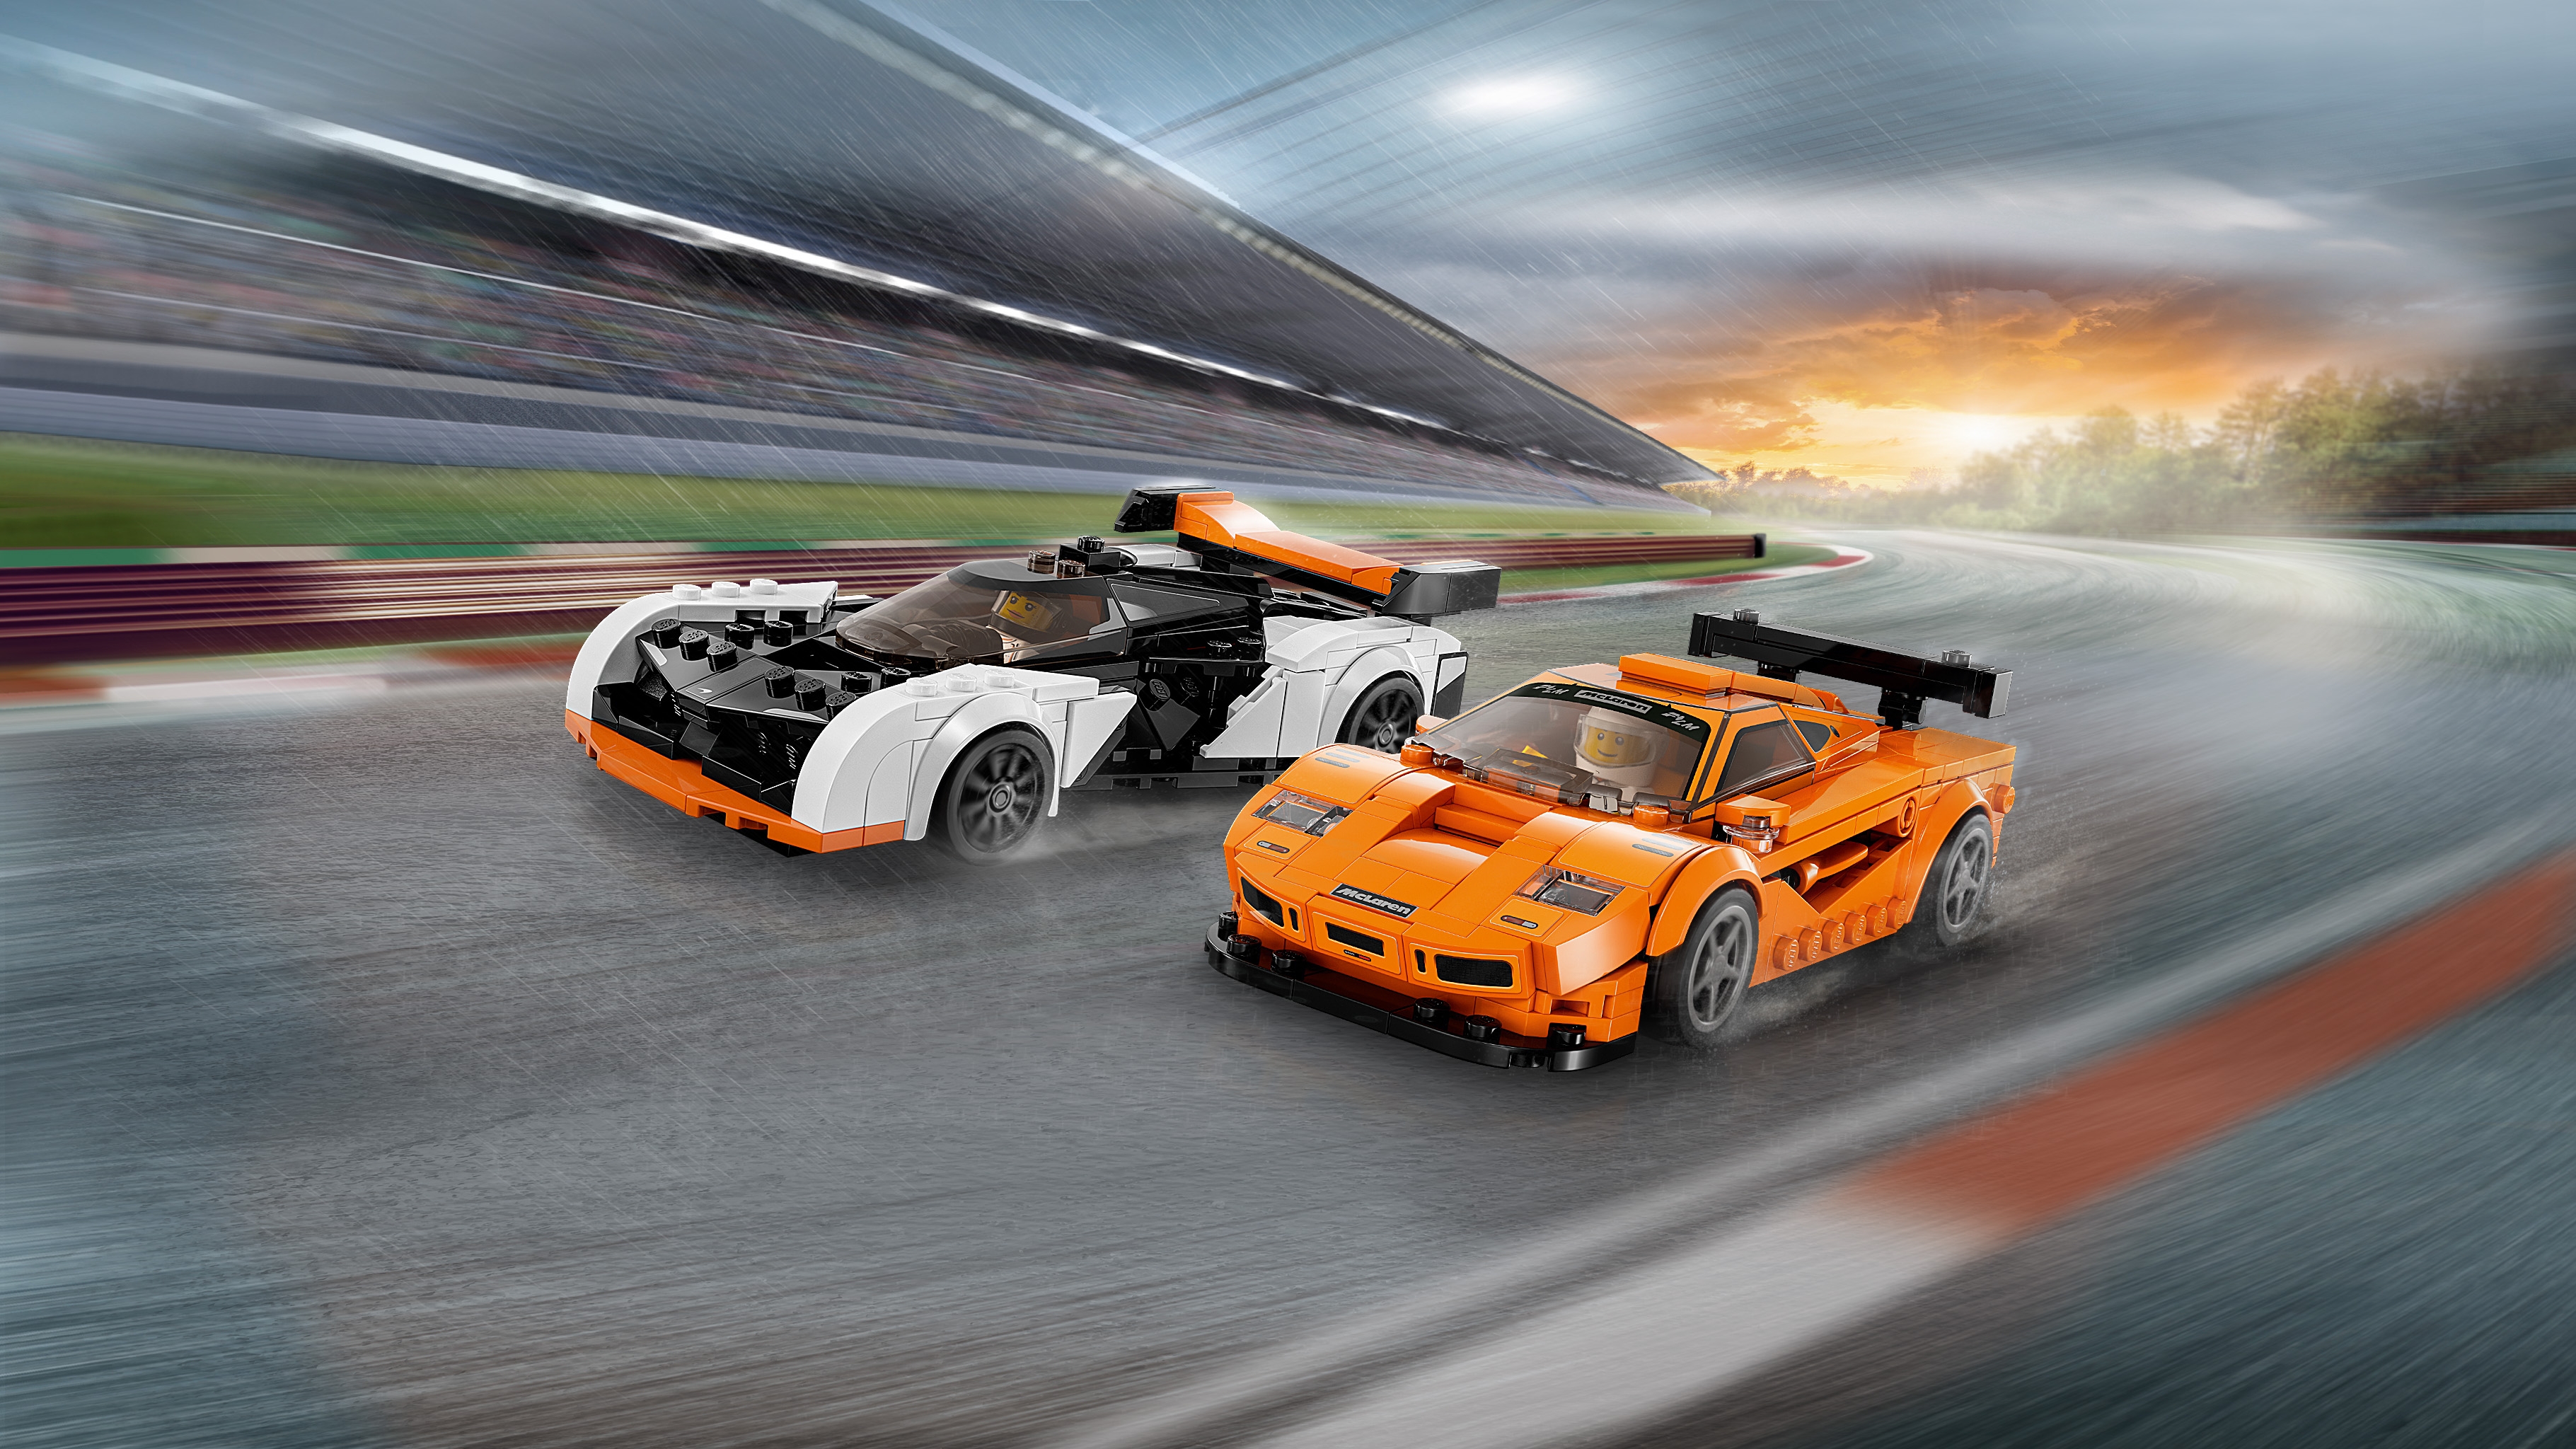 LEGO Speed Champions 76918 McLaren Solus GT & McLaren F1 LM, 2 modellini  auto da costruire in Vendita Online